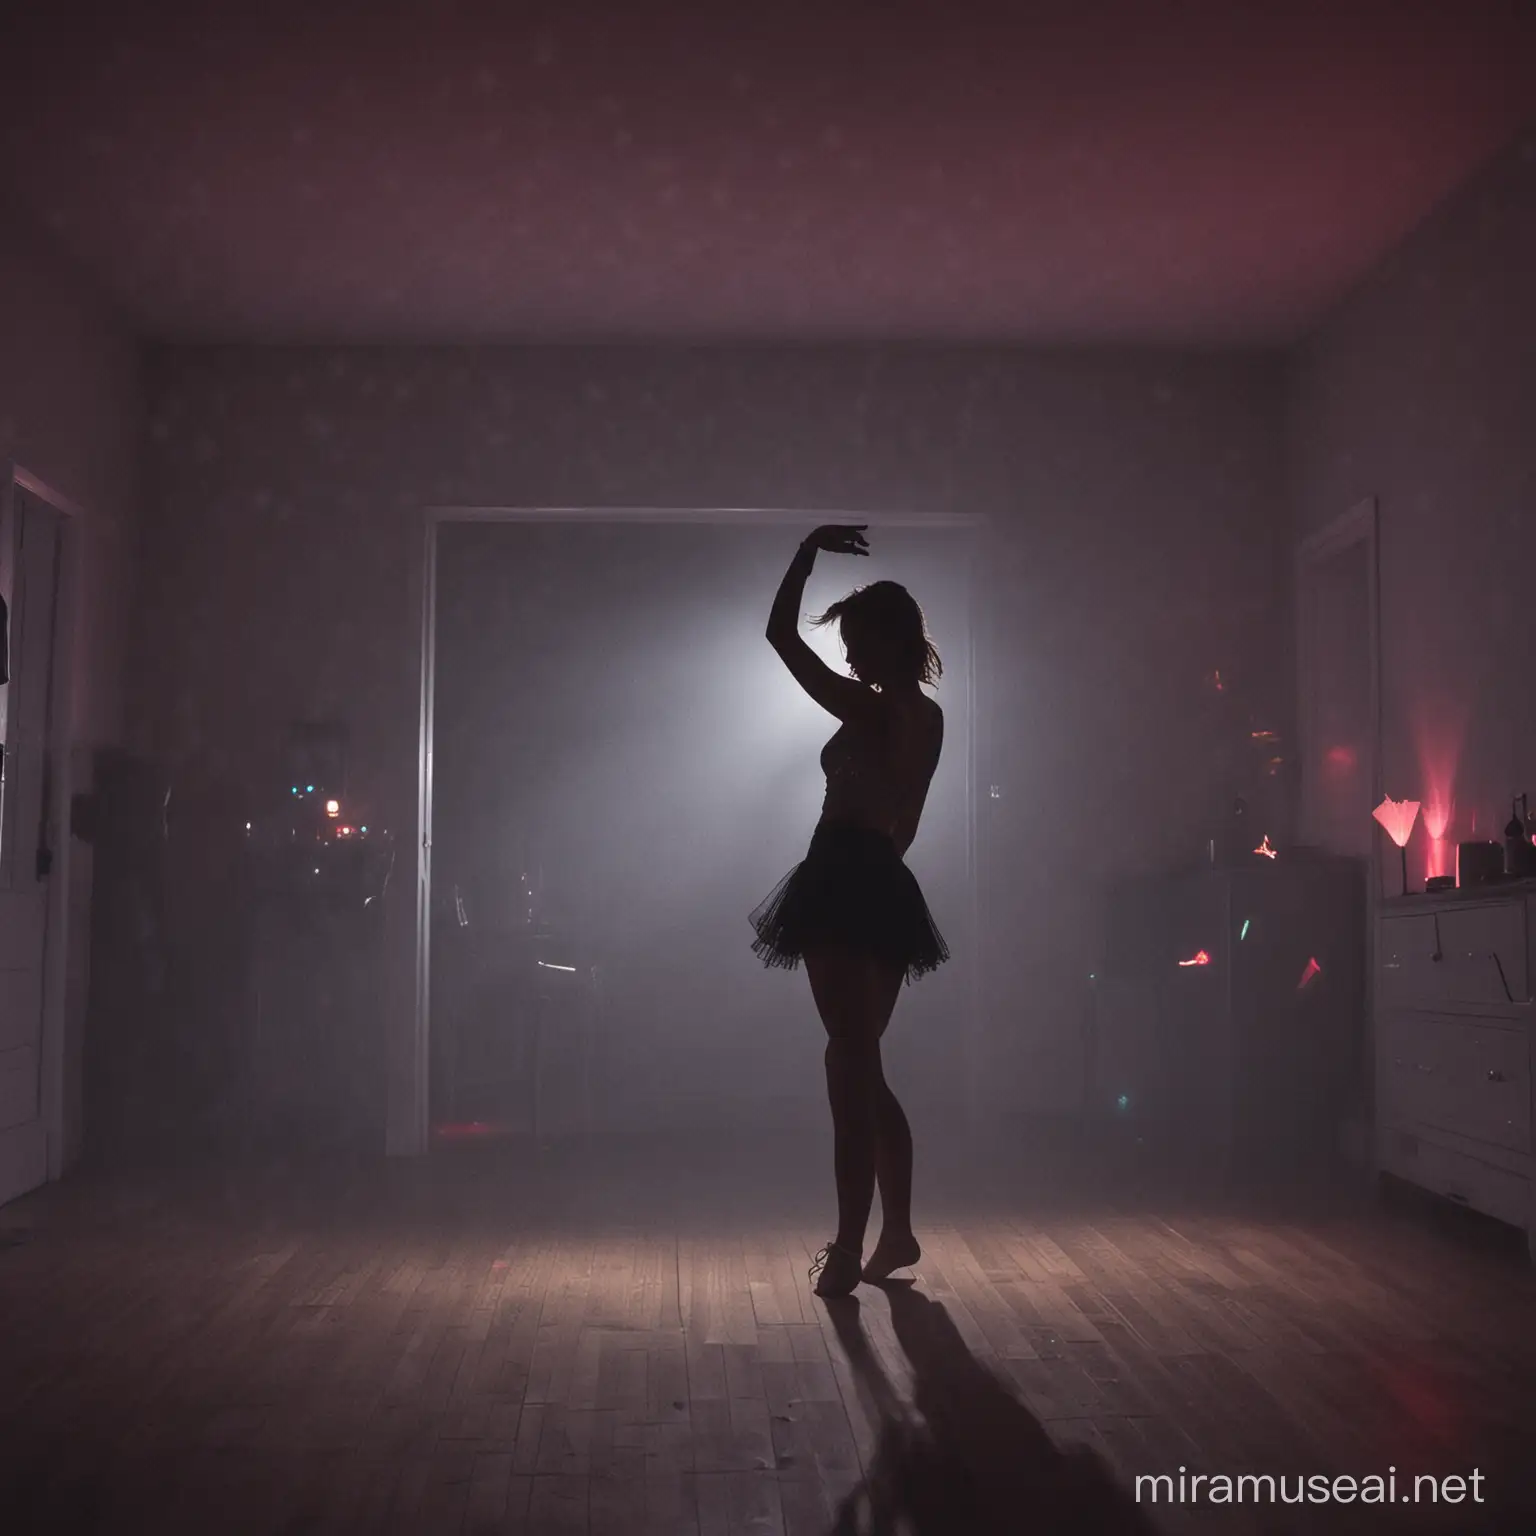 Elegant Dance Performance in Dimly Lit Room with Mood Lighting